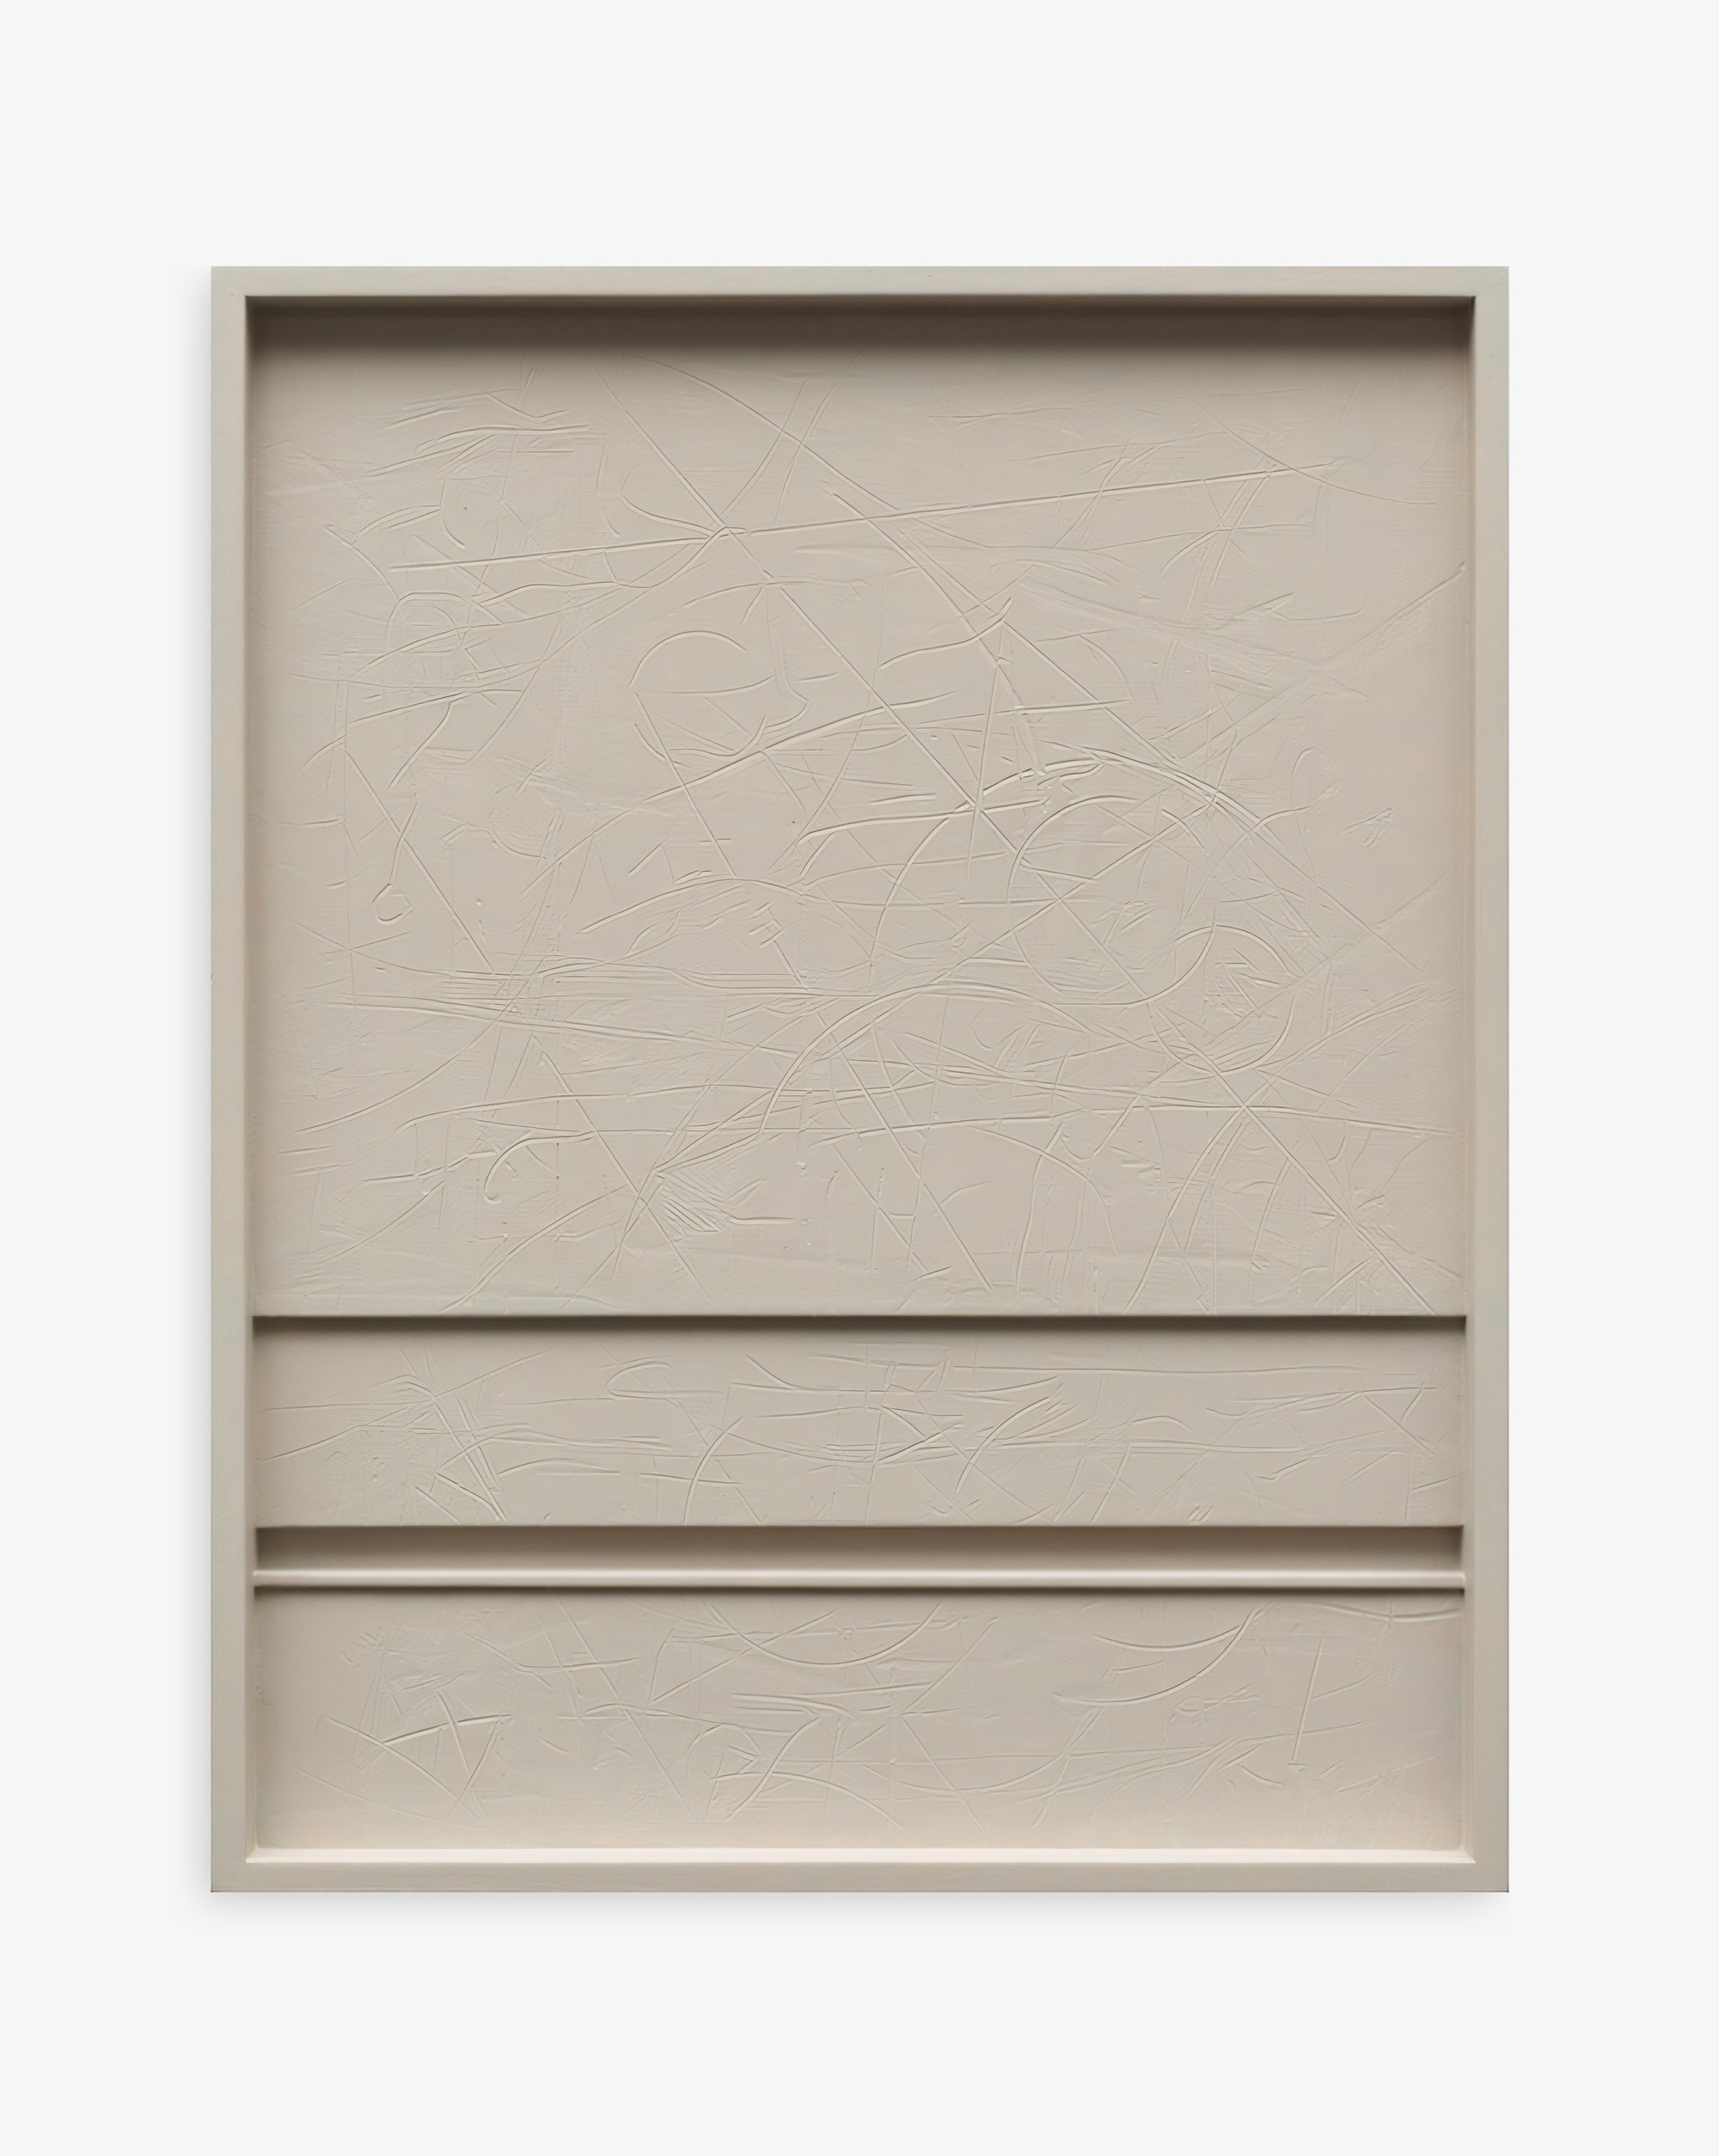 John Pittman, Ledge, 2019, Alkyd/Wood Relief, 30.48 x 24.13 x 3.81 cm © The Artist via Regards Gallery